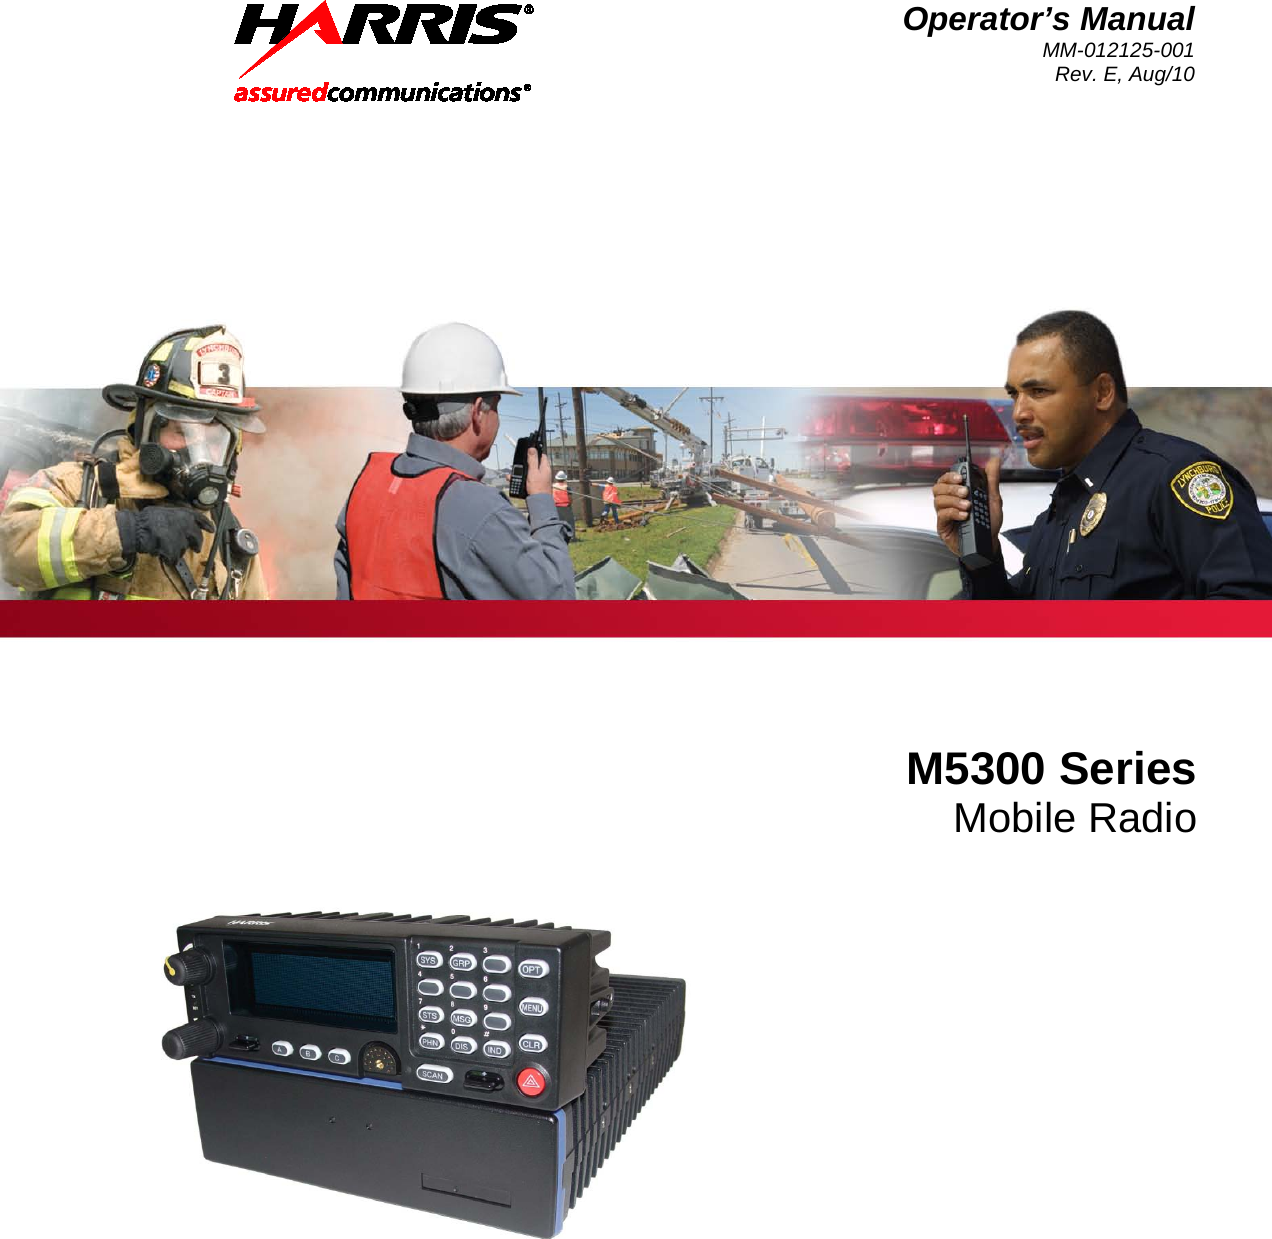  Operator’s Manual MM-012125-001 Rev. E, Aug/10    M5300 Series Mobile Radio    